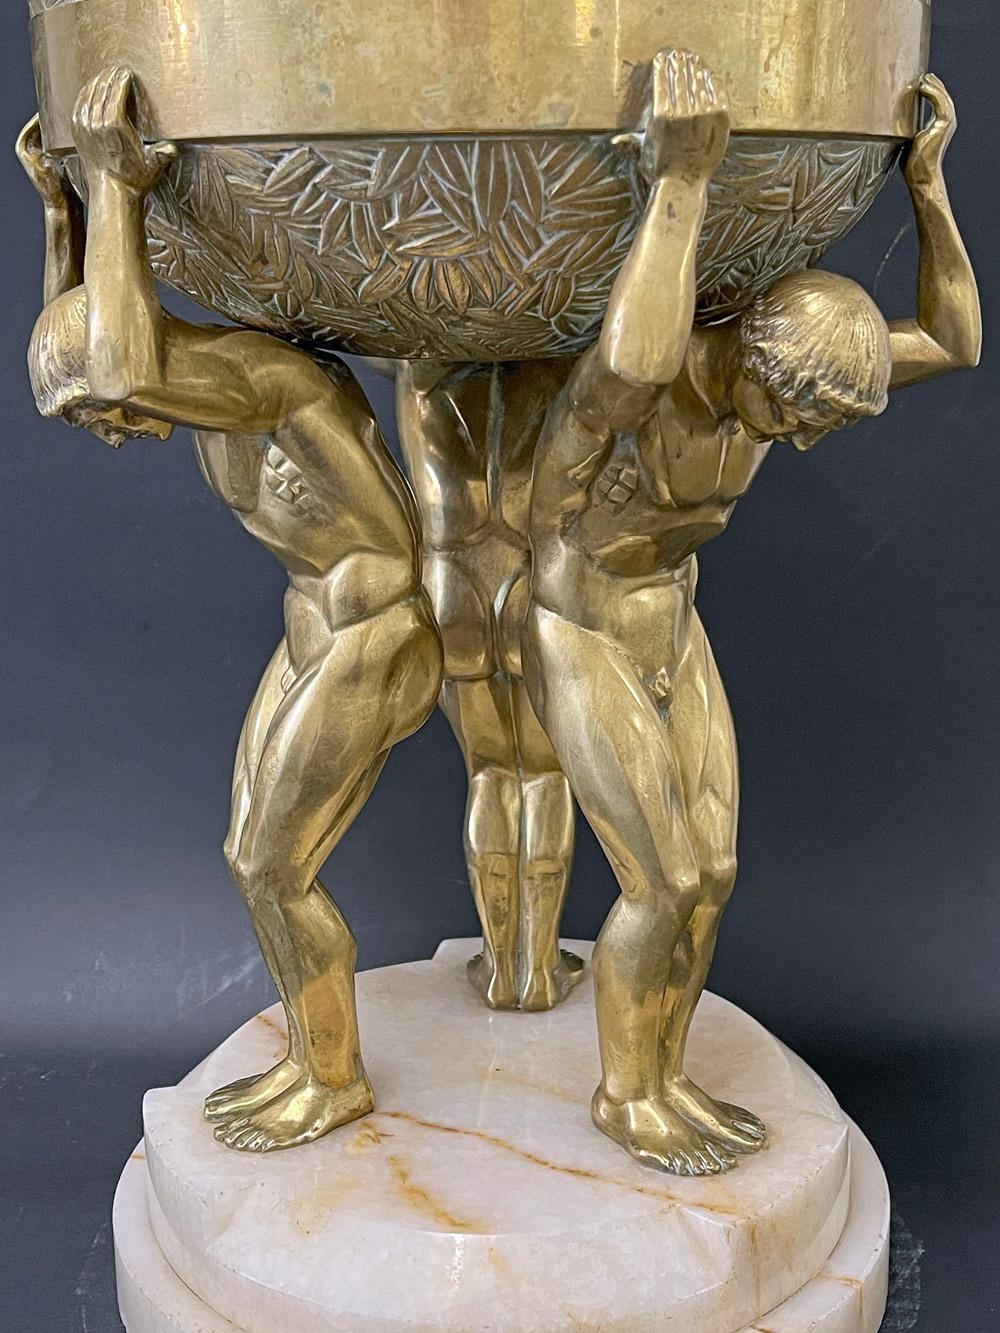 Gilt Rare Art Deco Centerpiece with Nude Male Figures, Gilded Bronze, France